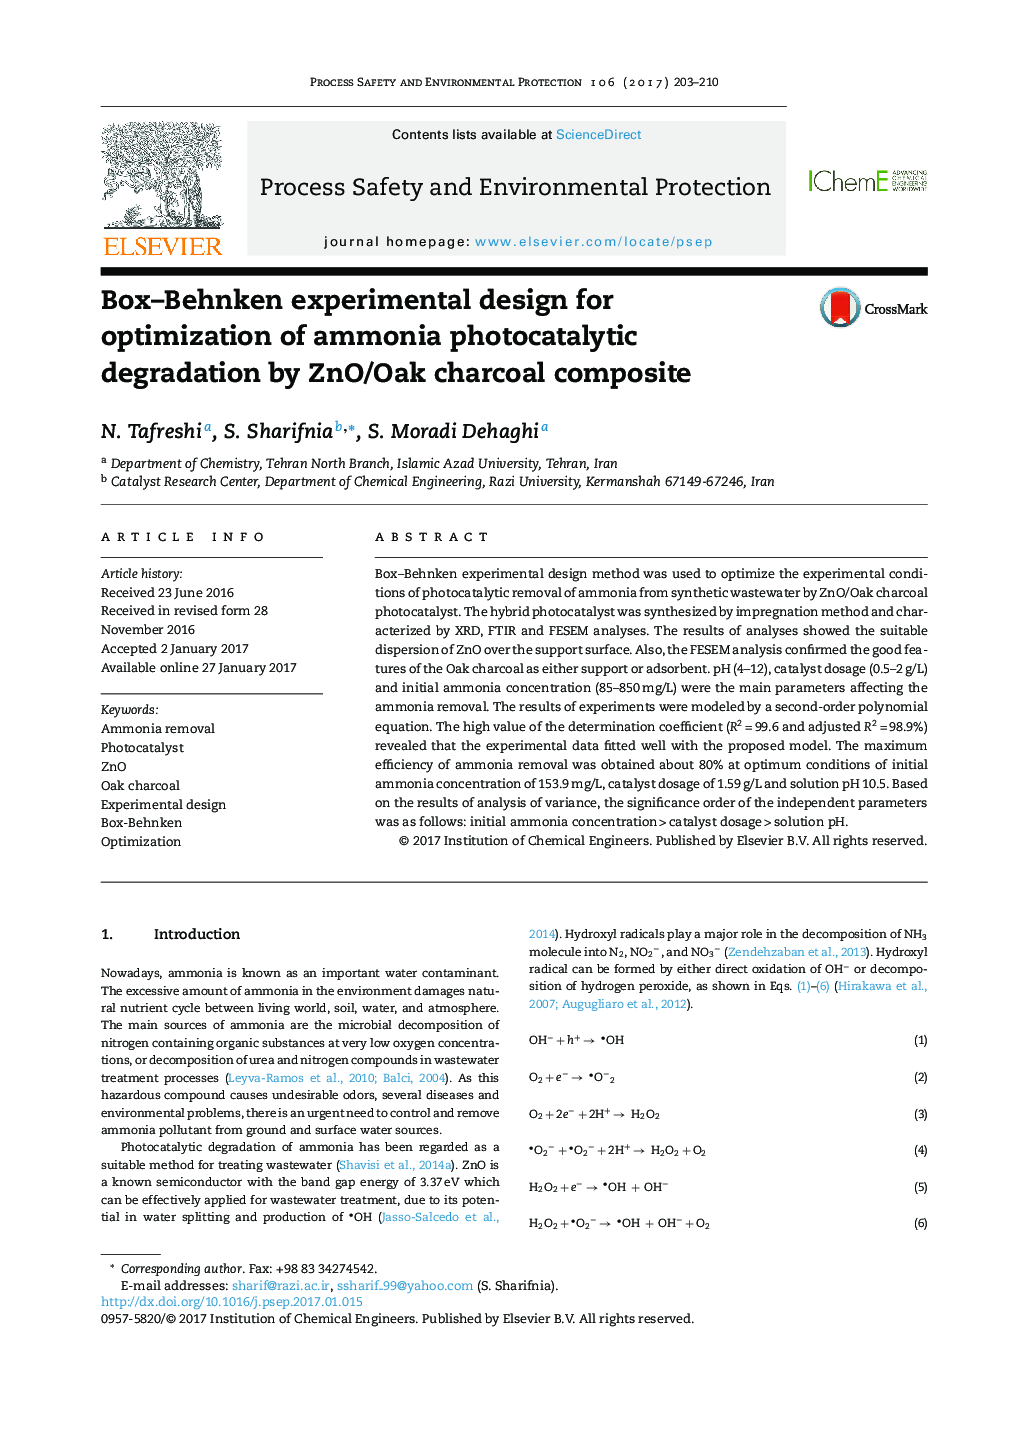 Box-Behnken experimental design for optimization of ammonia photocatalytic degradation by ZnO/Oak charcoal composite